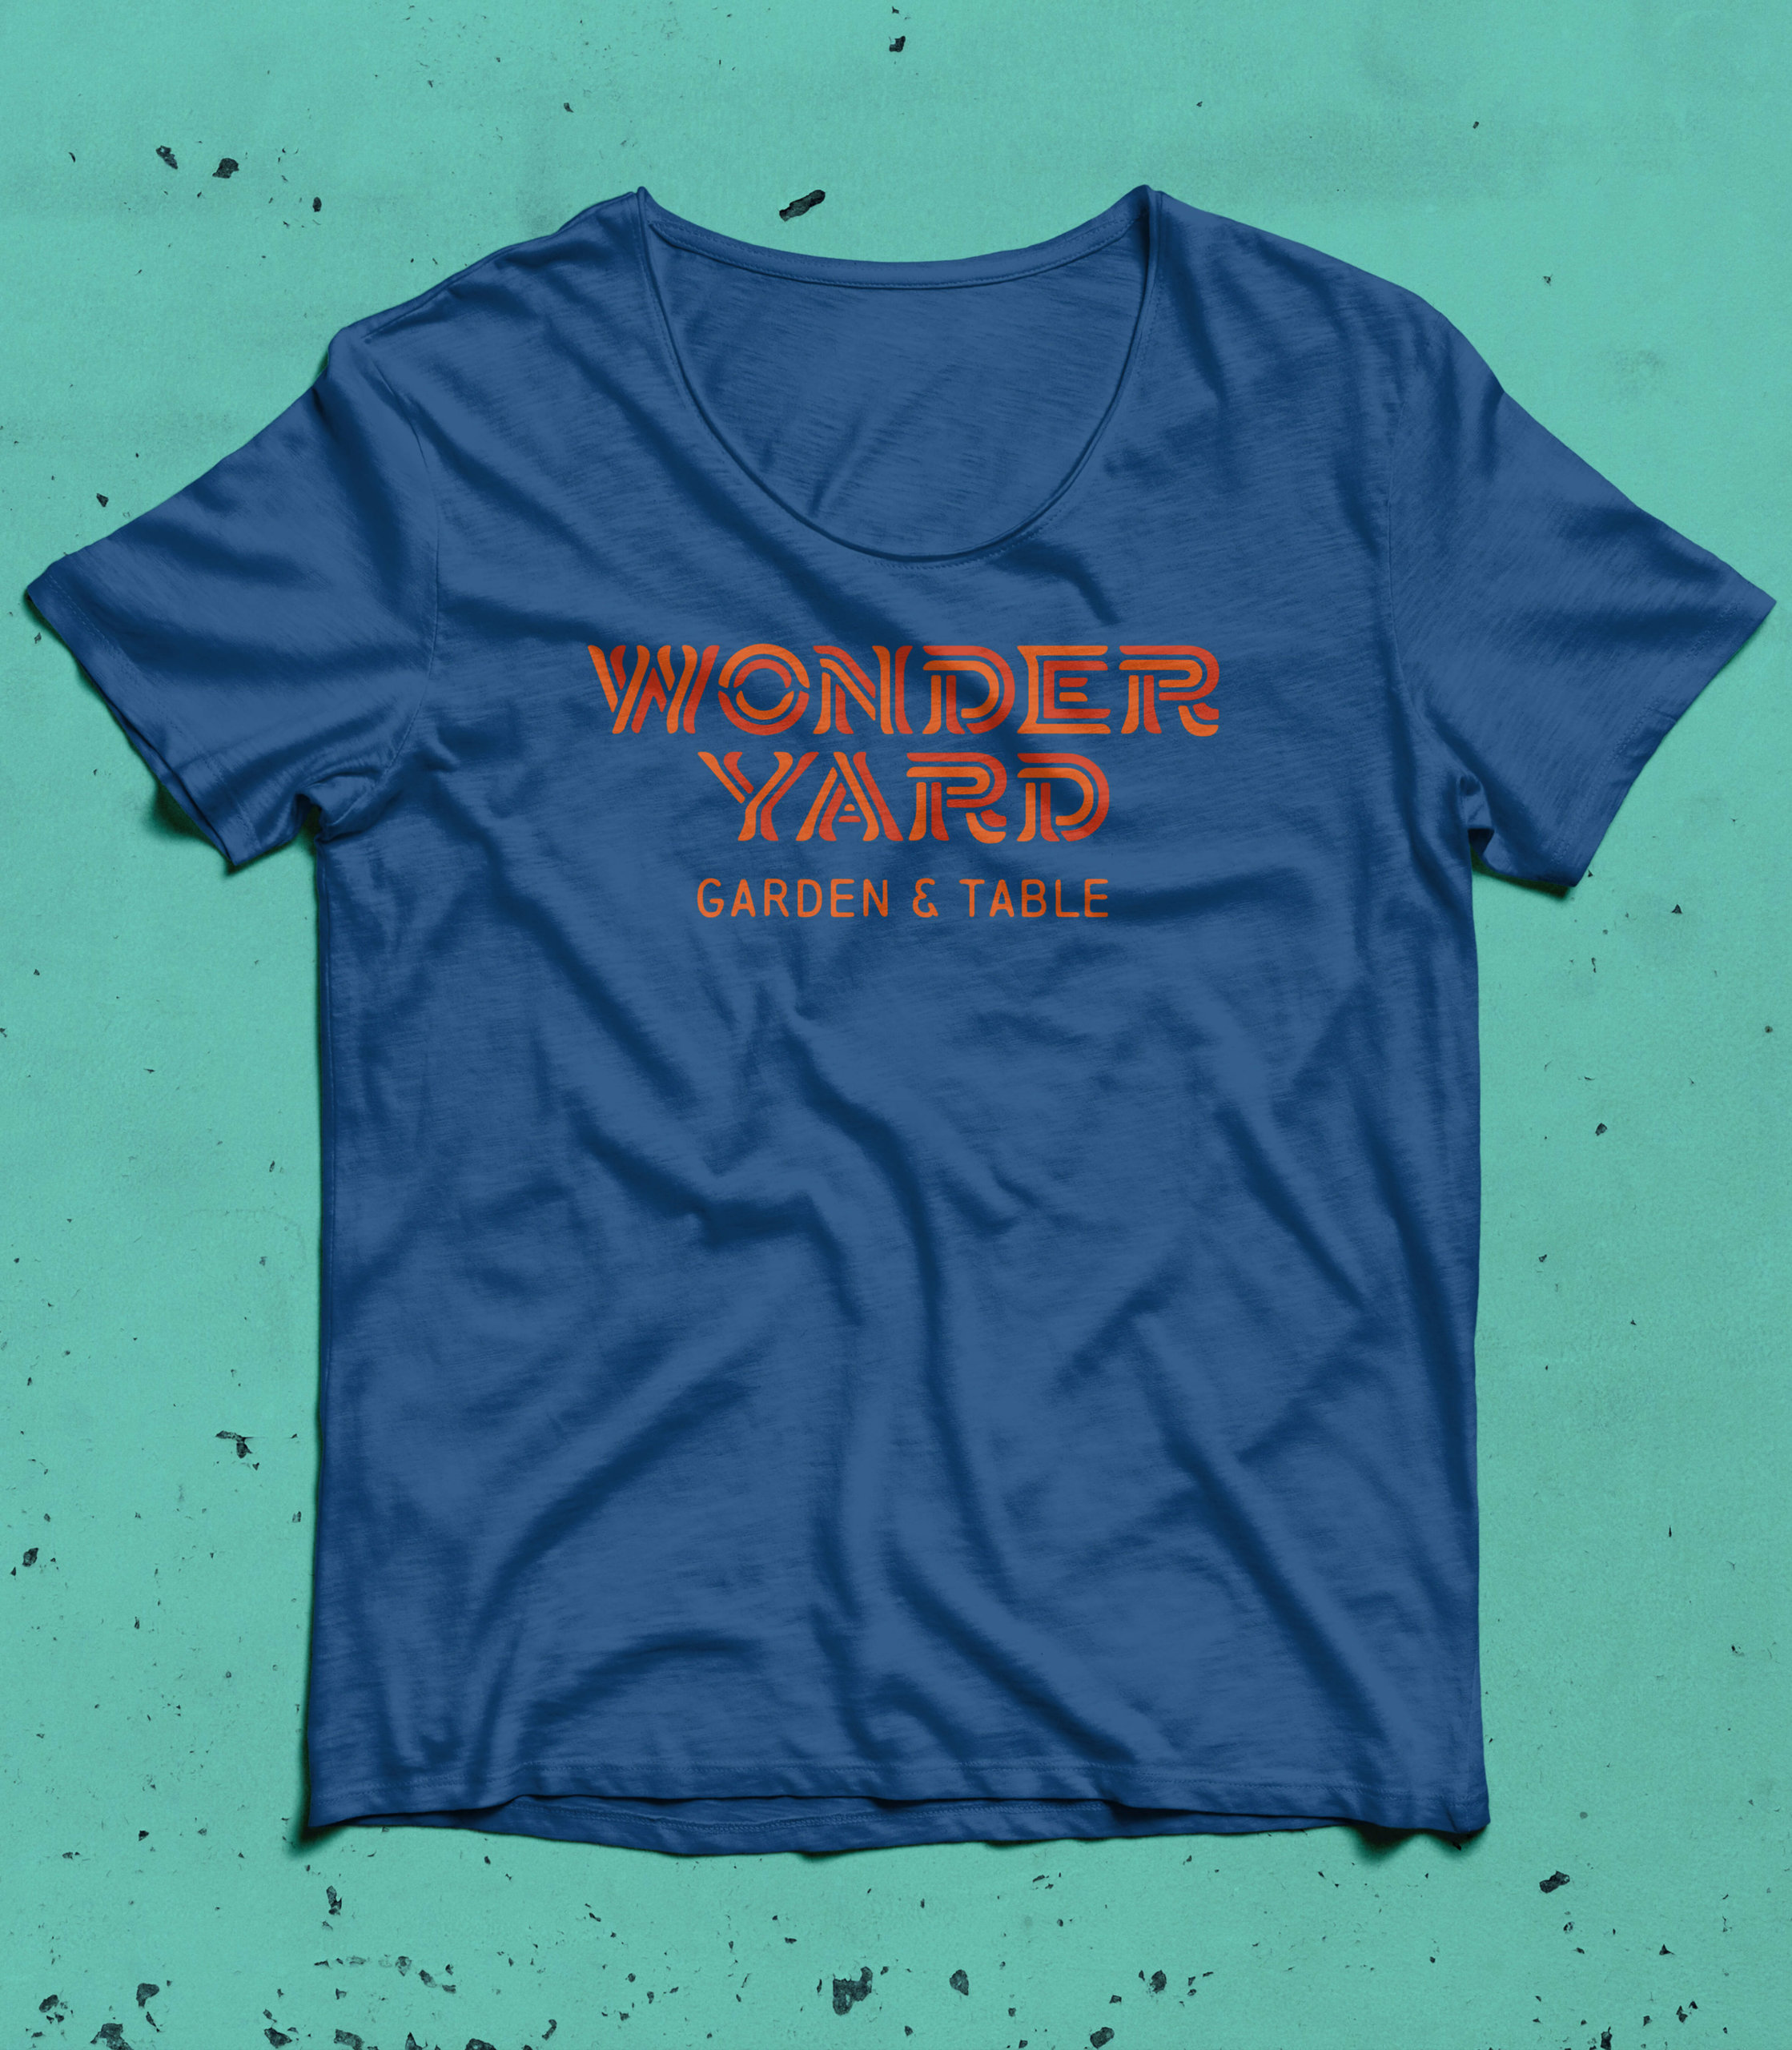 wonderyard restaurant branded shirt on teal background